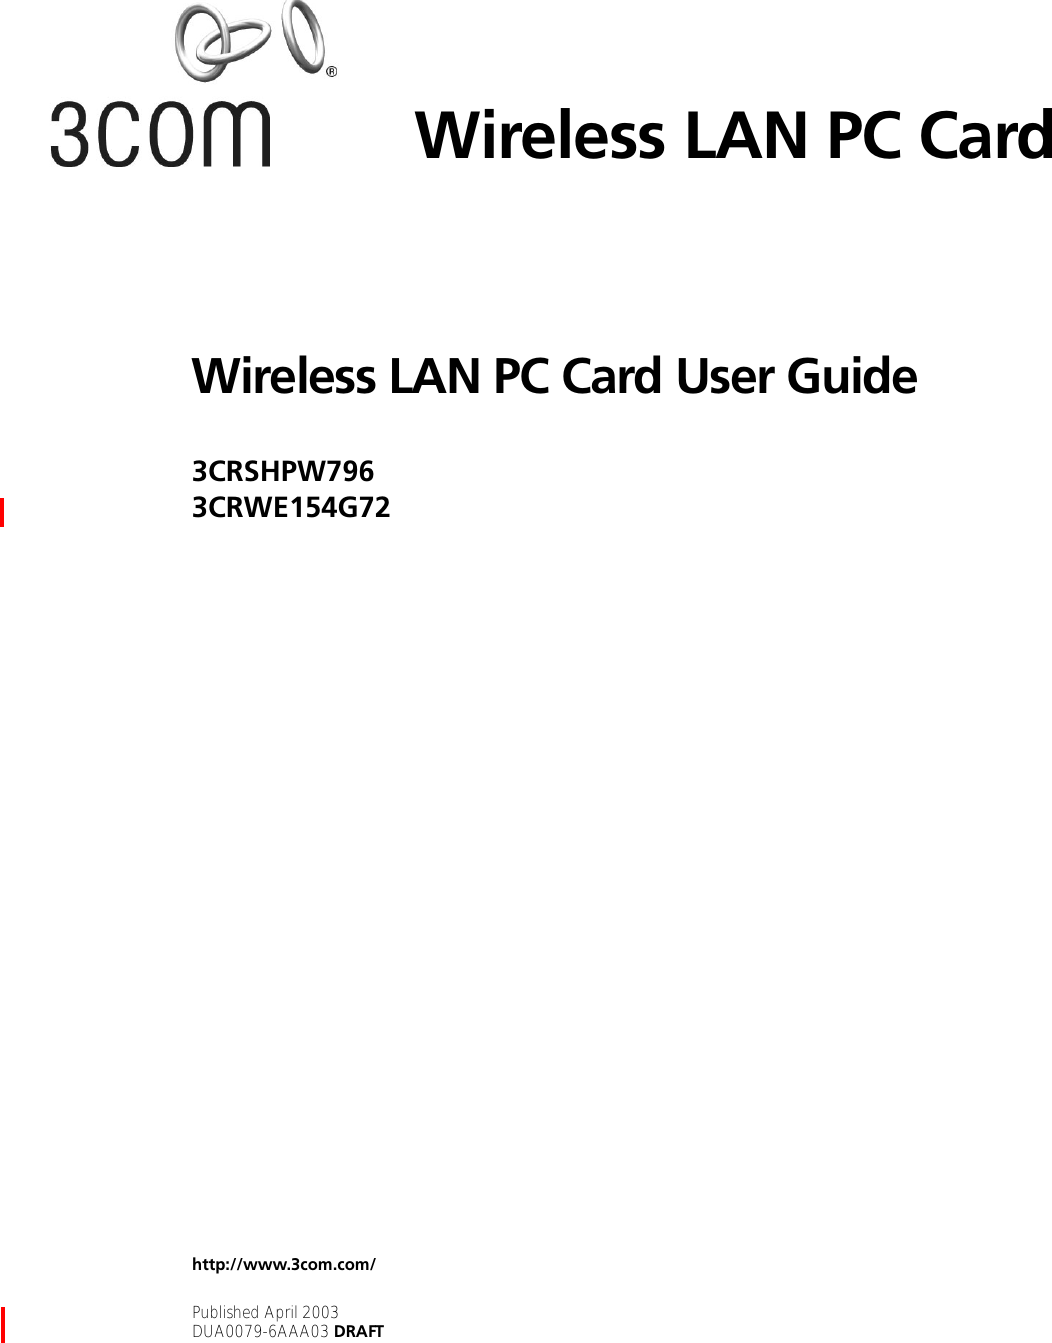 Wireless LAN PC Card User Guide3CRSHPW7963CRWE154G72Wireless LAN PC Card http://www.3com.com/Published April 2003DUA0079-6AAA03 DRAFT